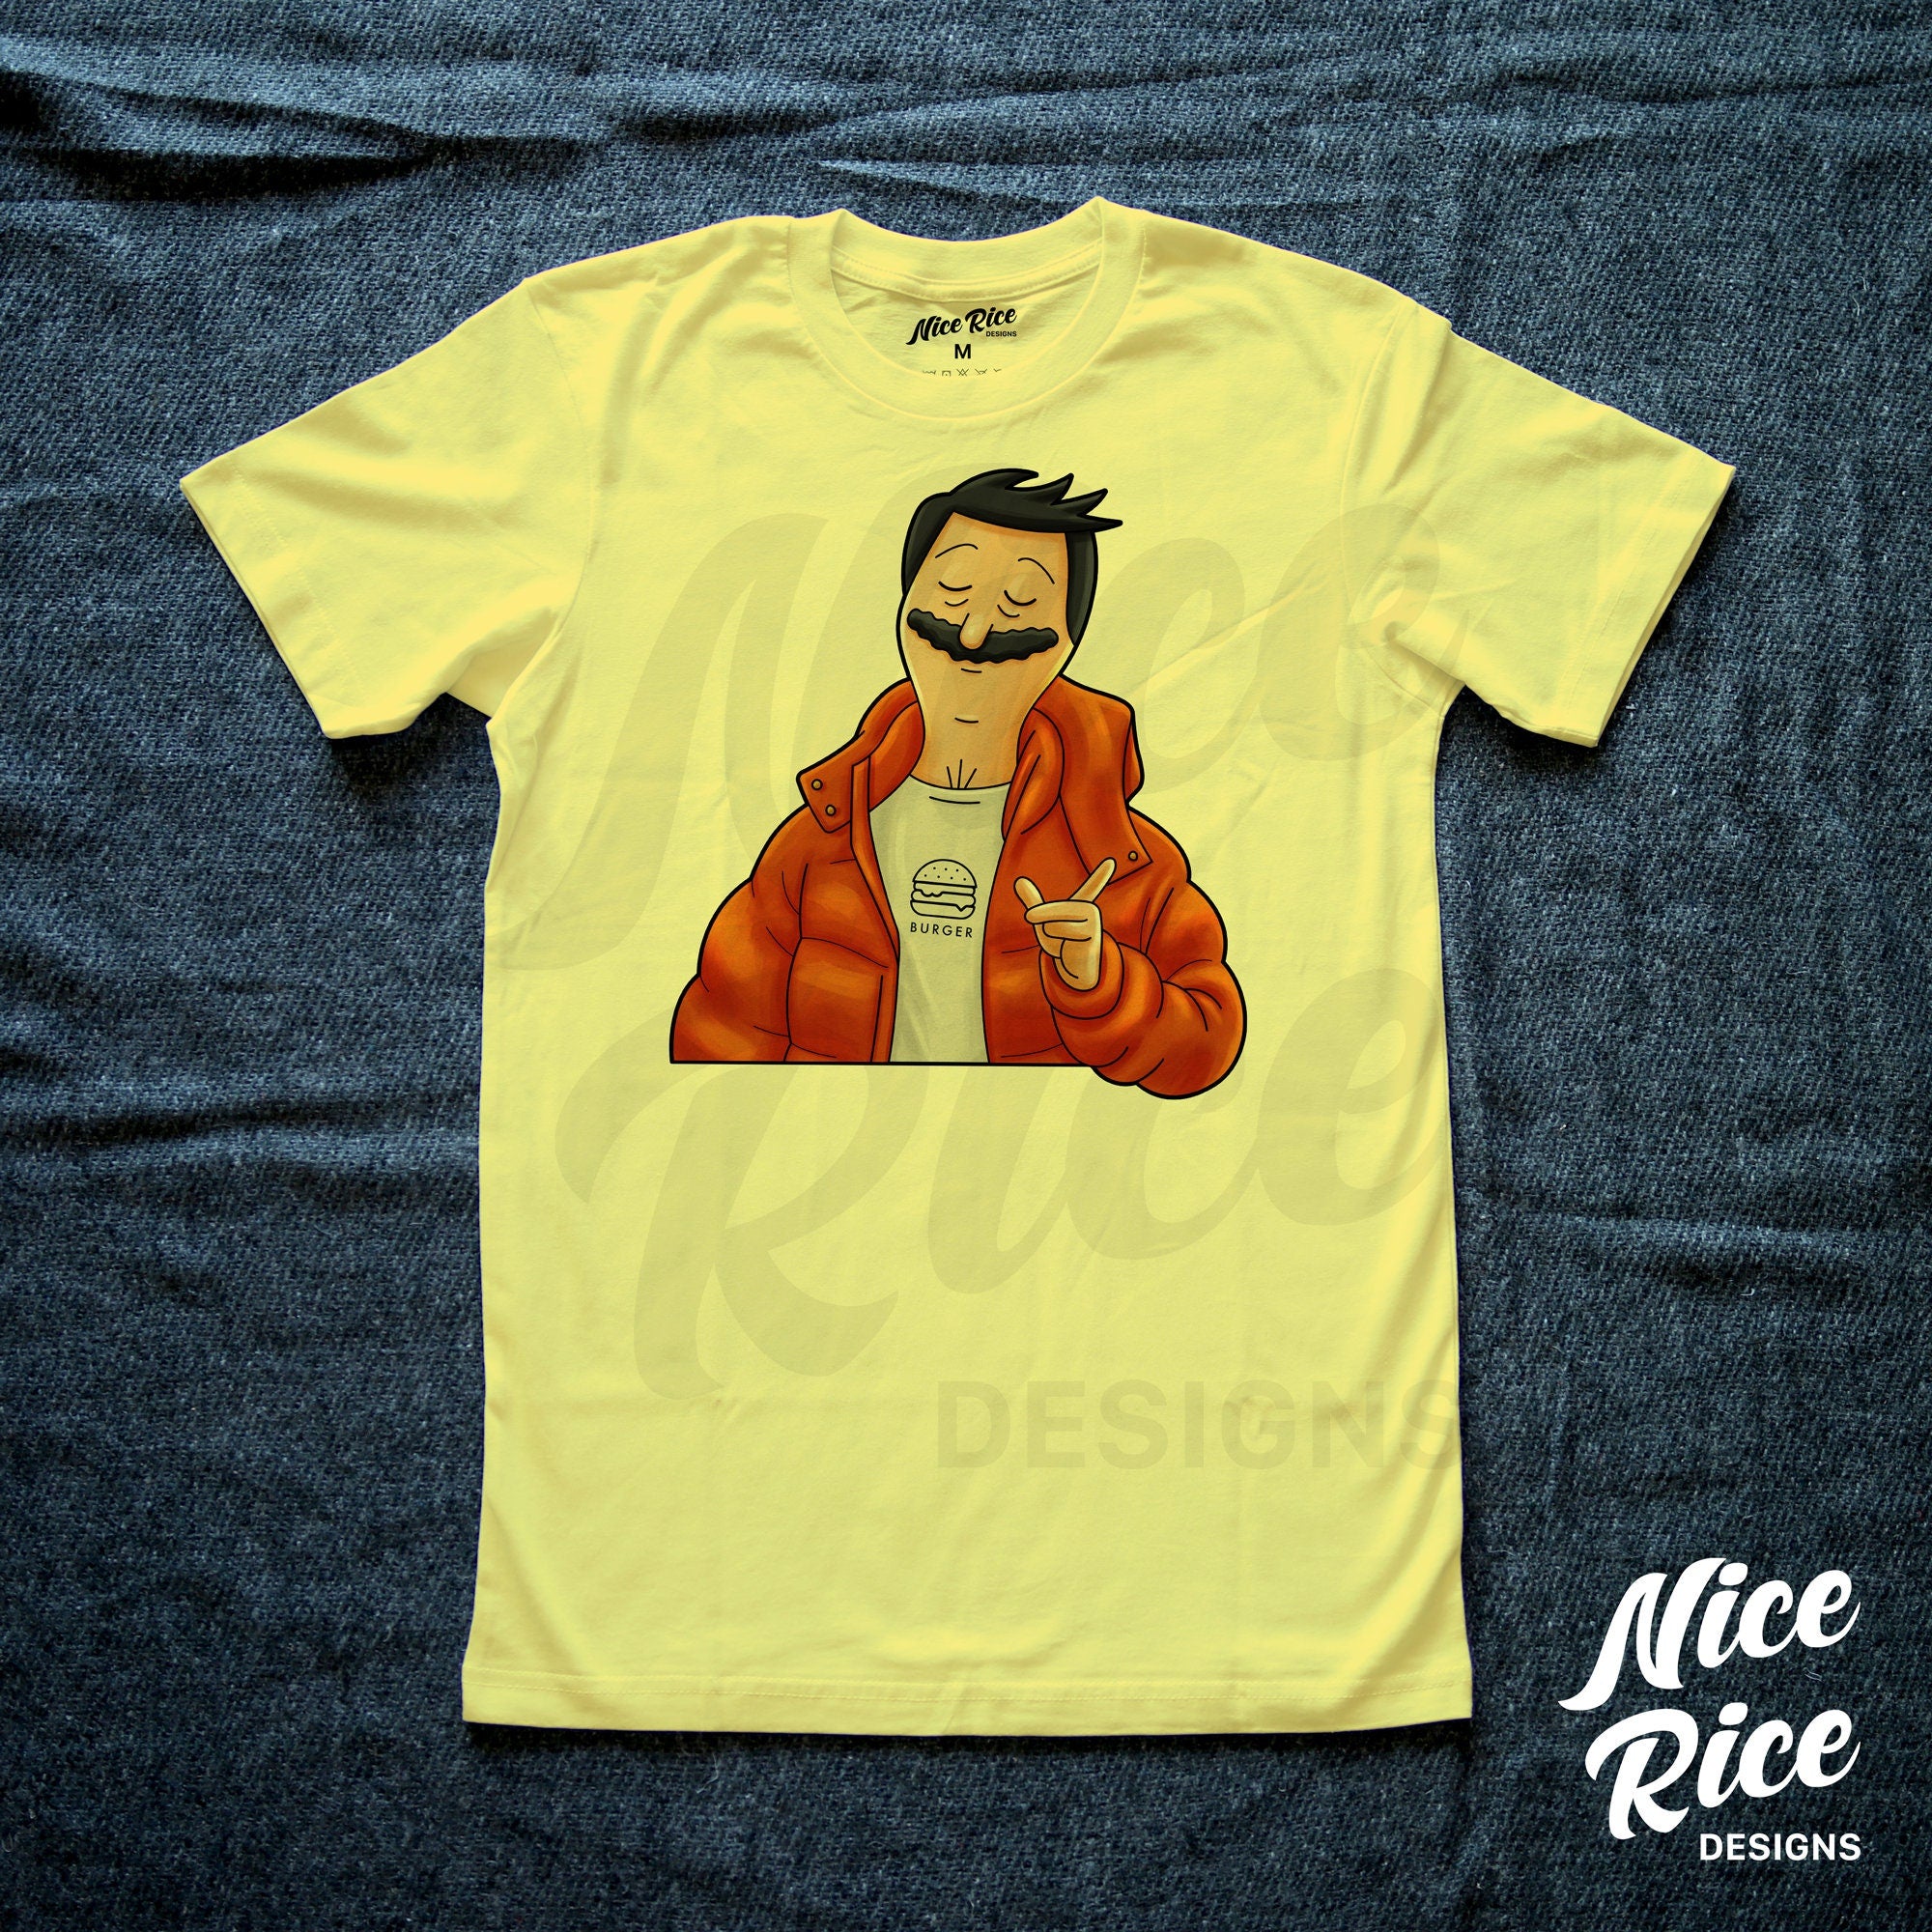 Hotline Bob Shirt by Nice Rice Designs